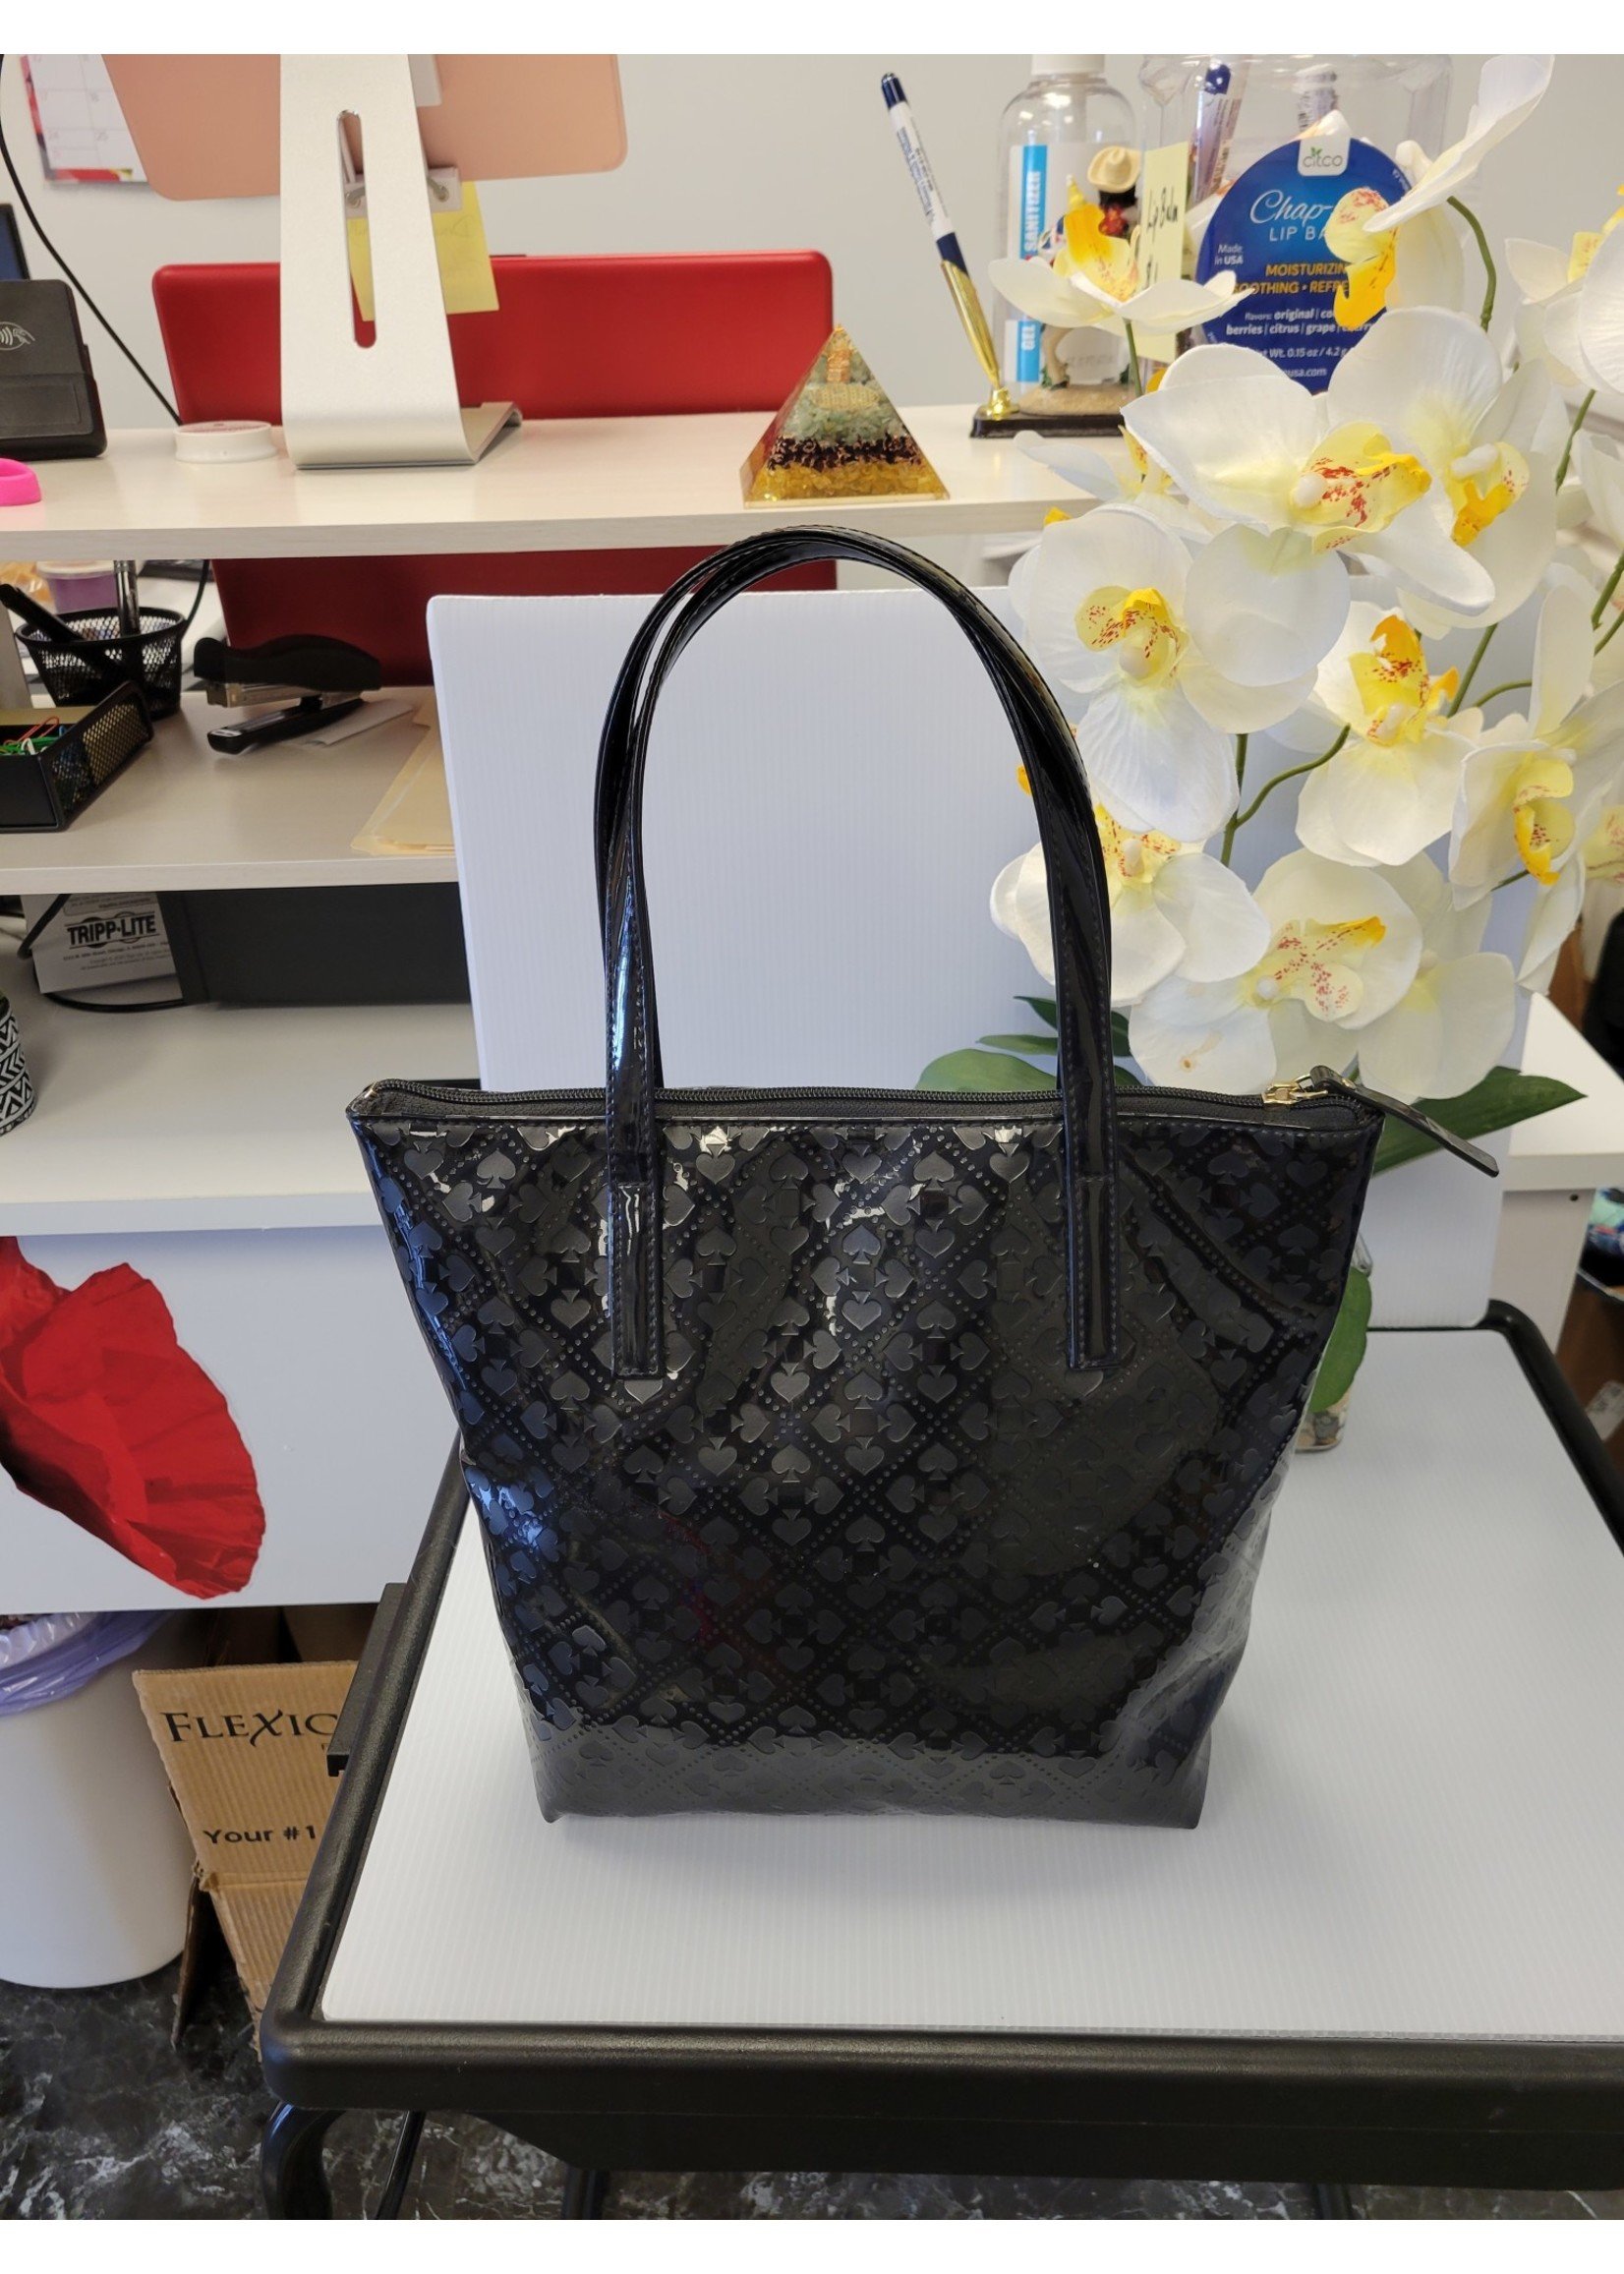 Kate Spade New York Patent Leather Tote Bag - Grey Shoulder Bags, Handbags  - WKA349355 | The RealReal